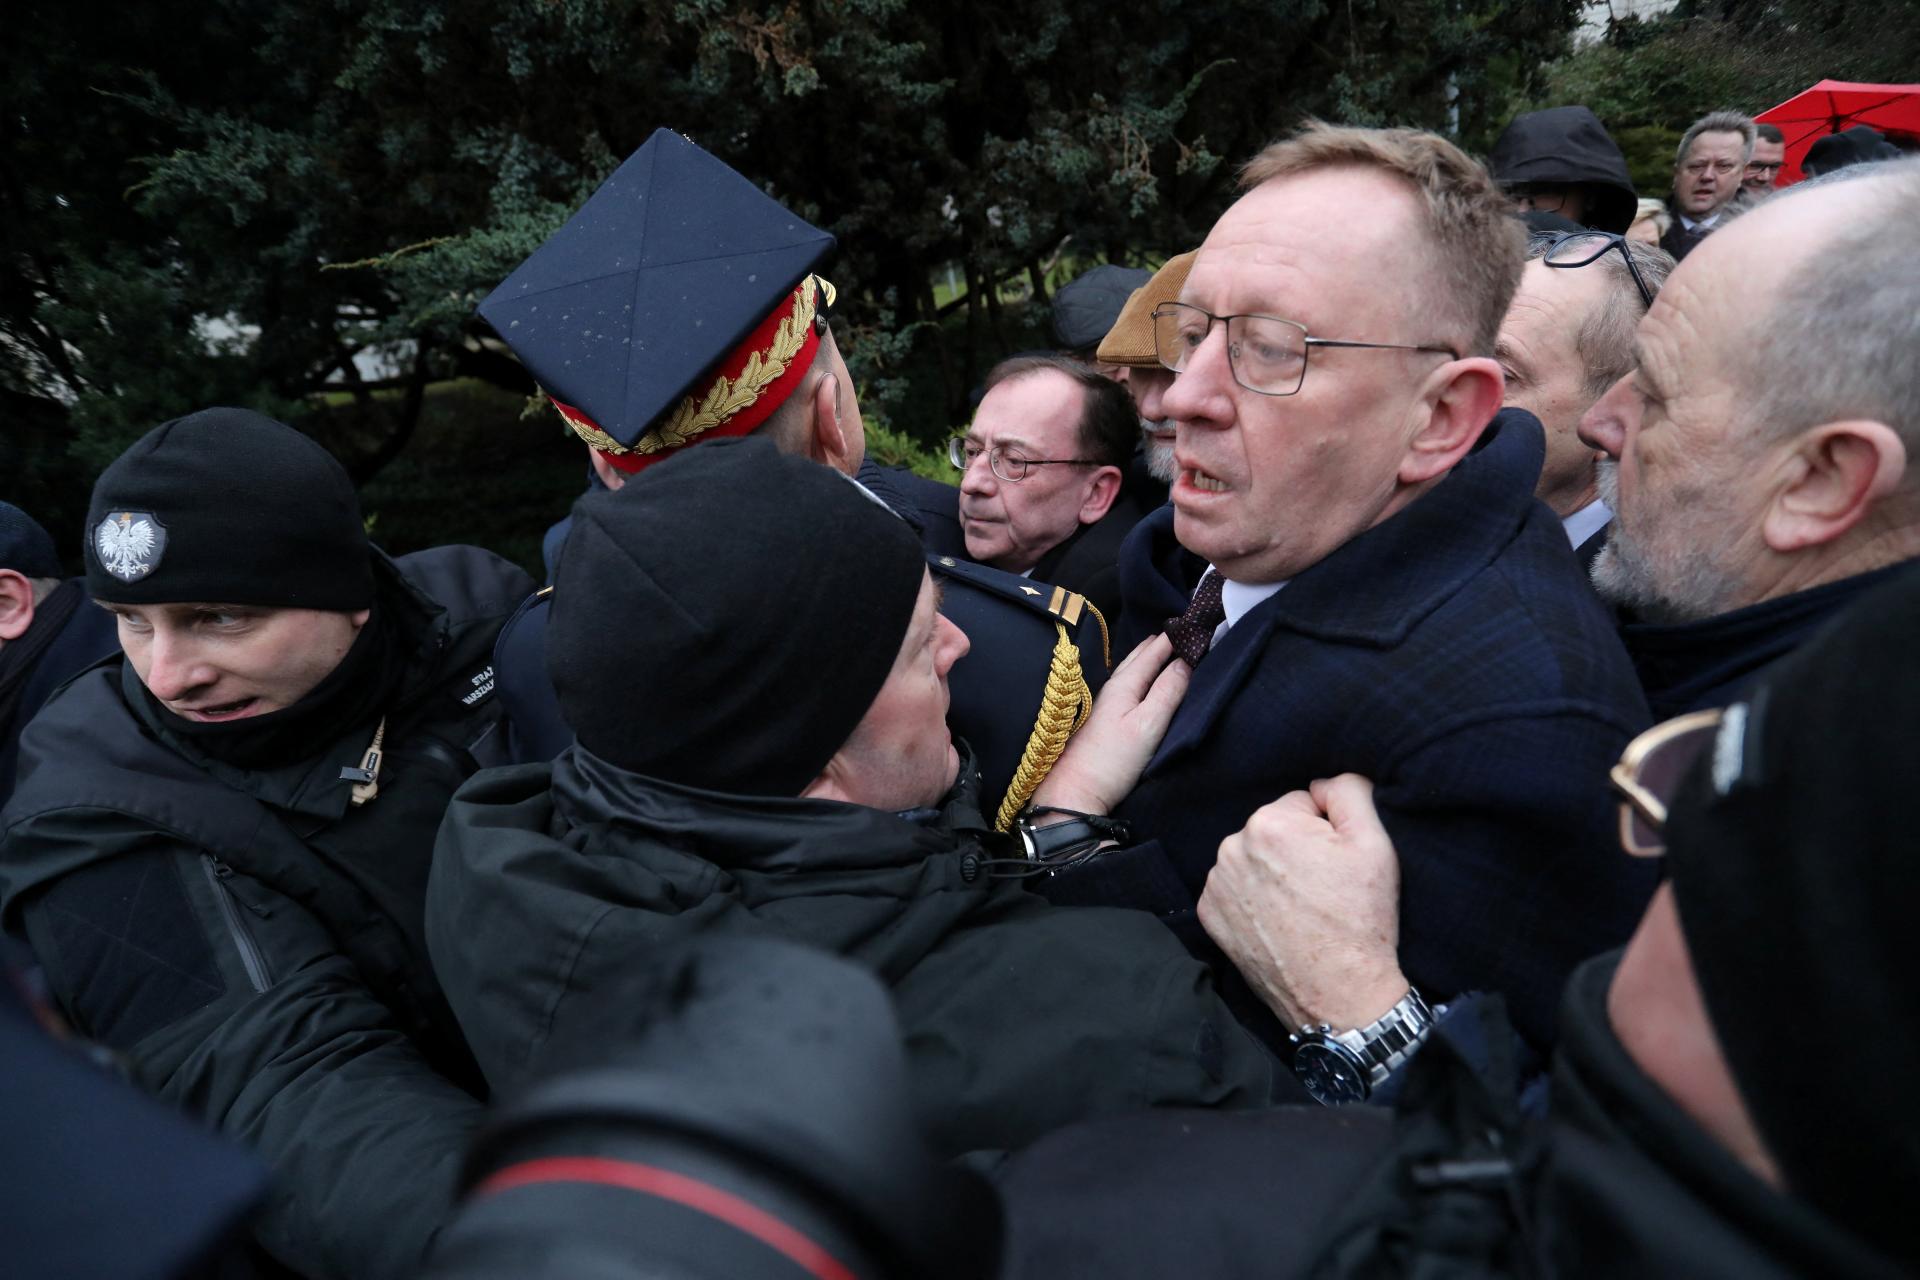 Dvaja poľskí opoziční politici, ktorých omilostil prezident, sa dostali do konfliktu s parlamentnou ochrankou